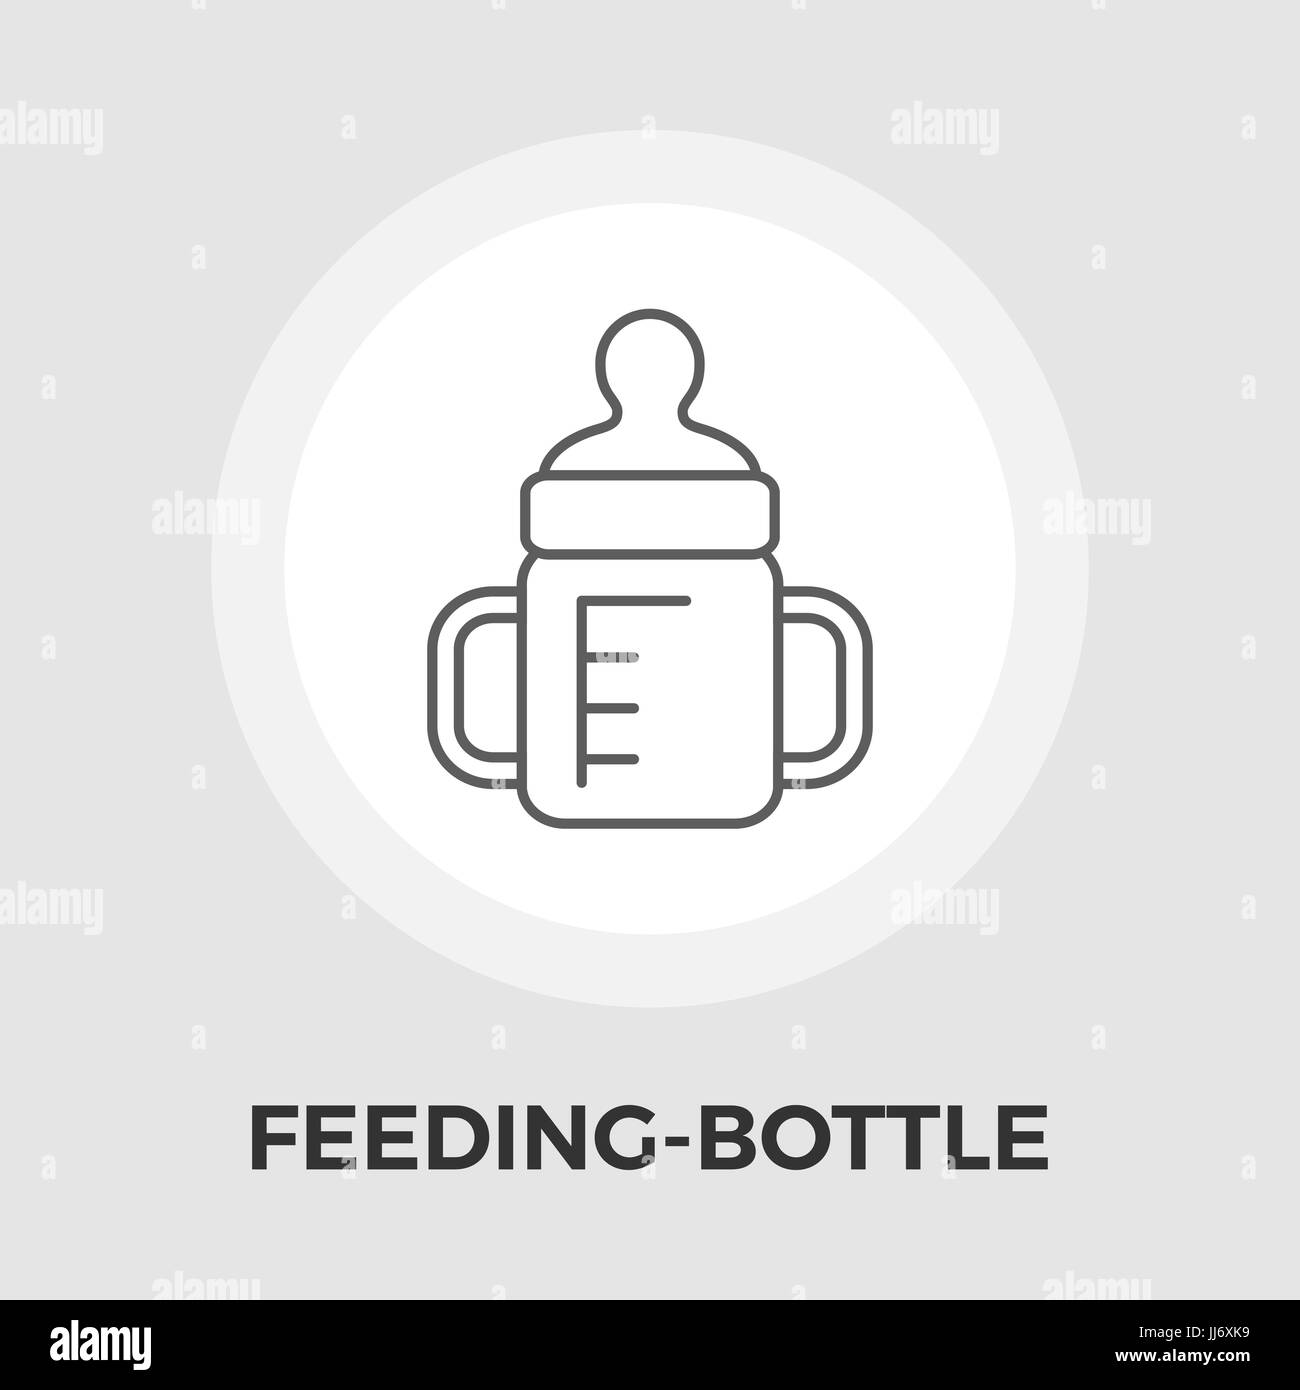 https://c8.alamy.com/comp/JJ6XK9/feeding-bottle-icon-vector-flat-icon-isolated-on-the-white-background-JJ6XK9.jpg